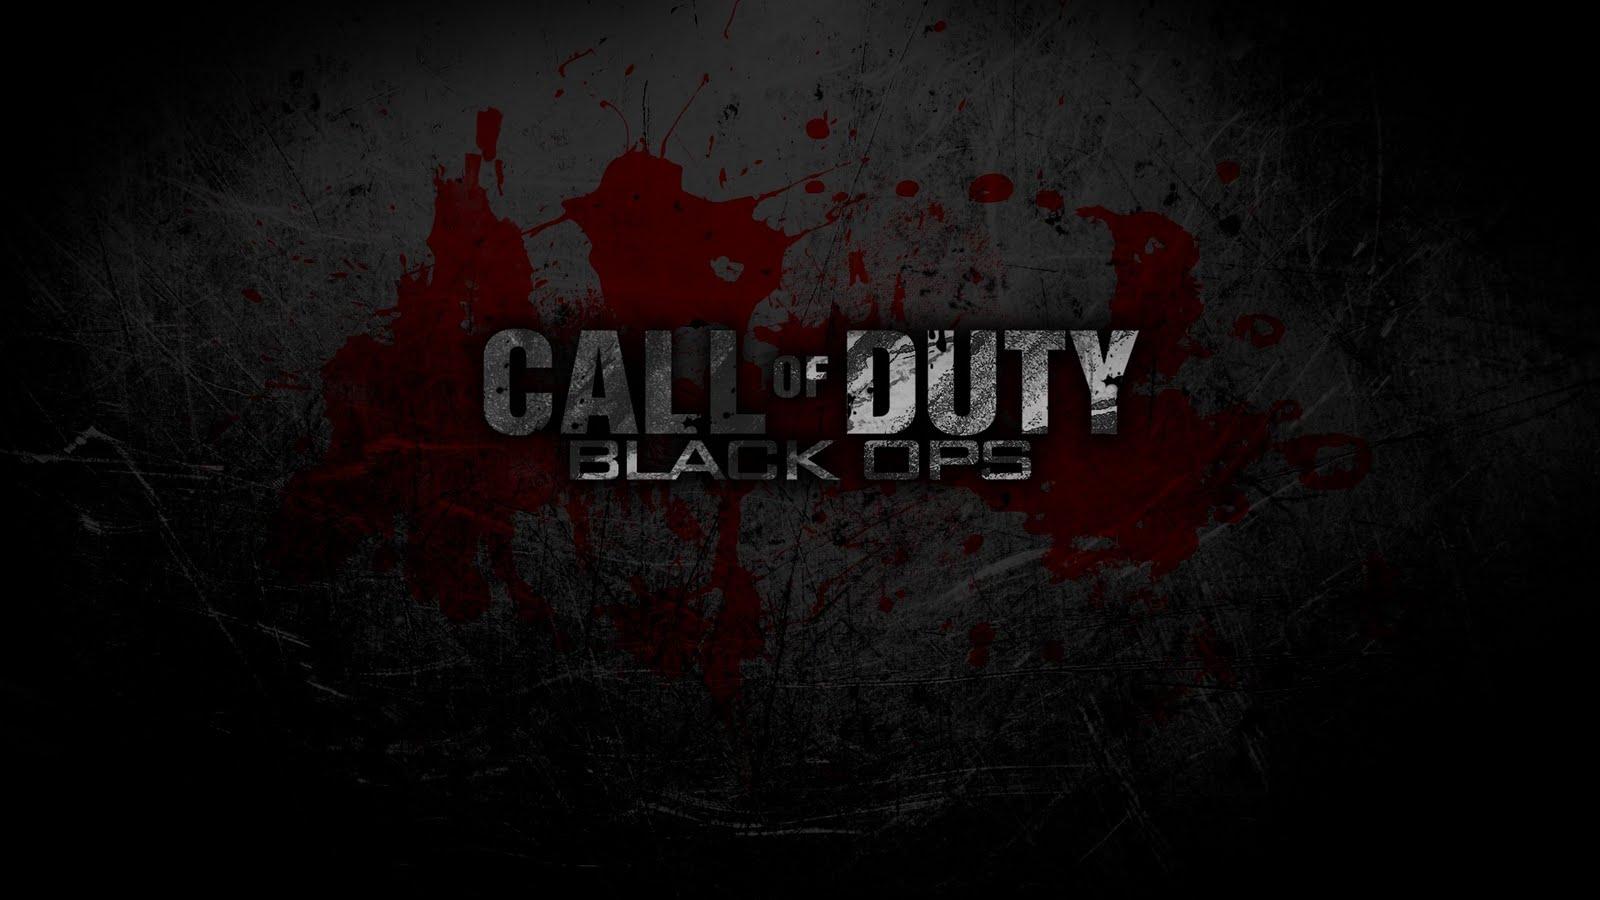 HD WALLPAPERS: Call of Duty Black Ops HD Wallpaper